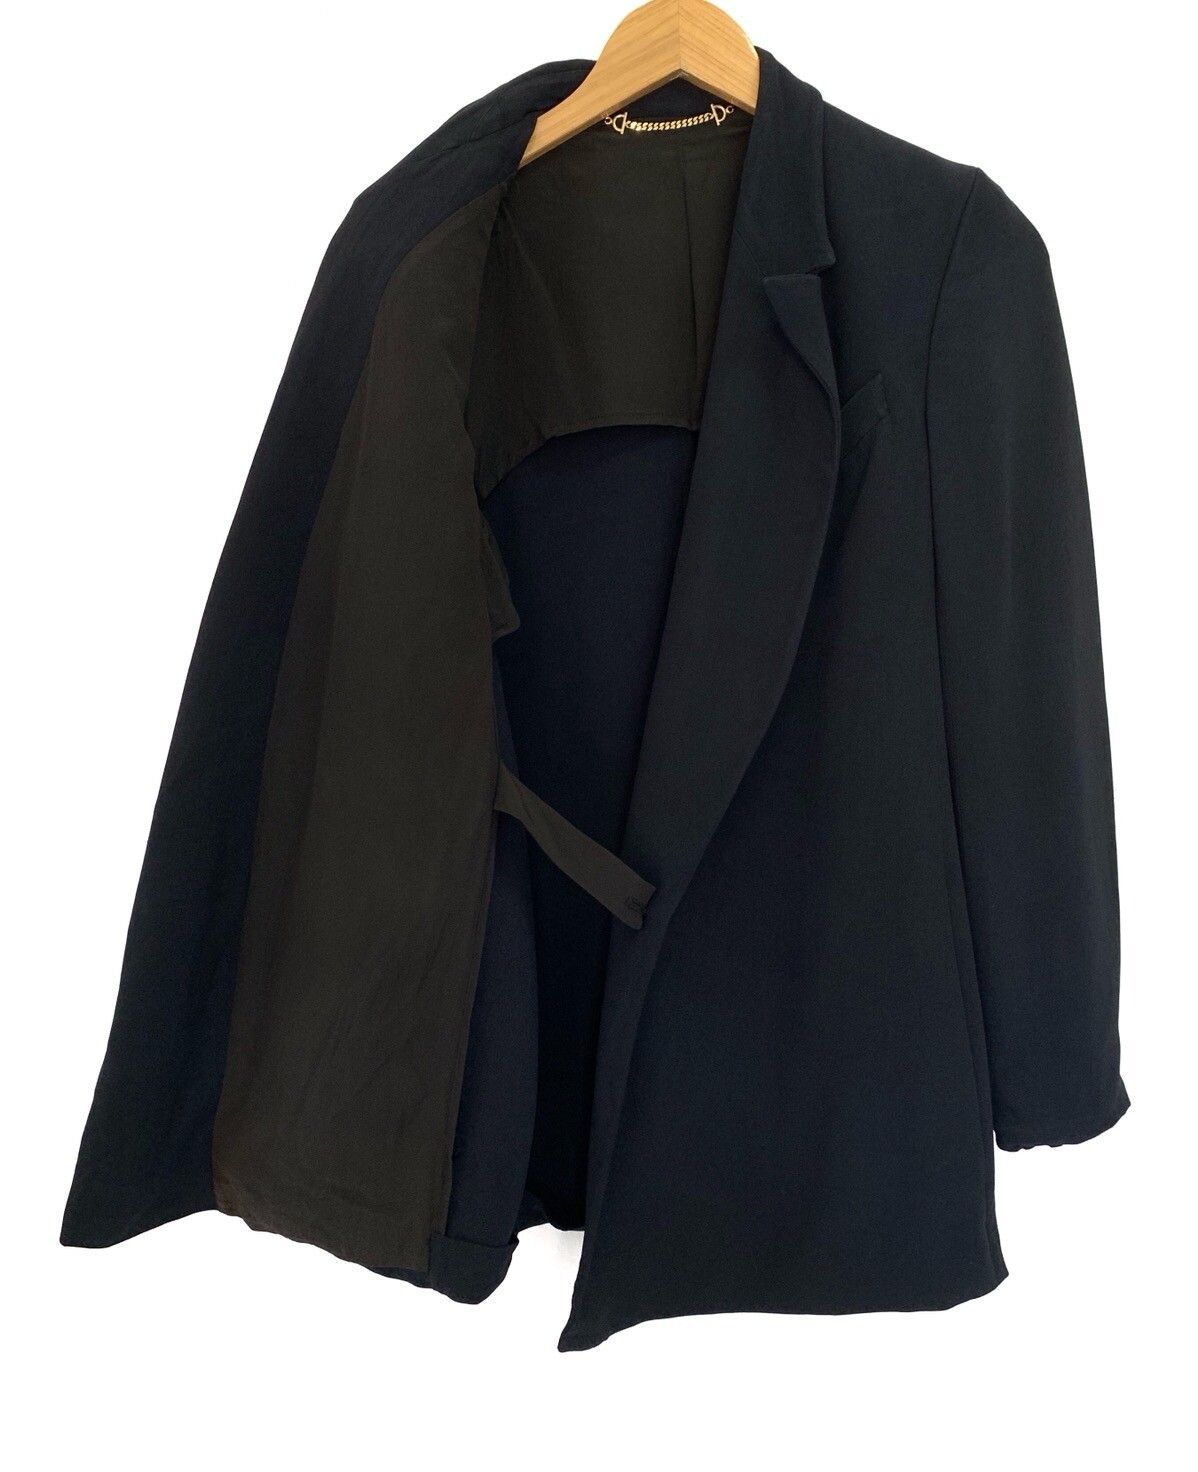 Gucci GUCCI Black Cardigan Blazer Jacket Size US S / EU 44-46 / 1 - 5 Thumbnail